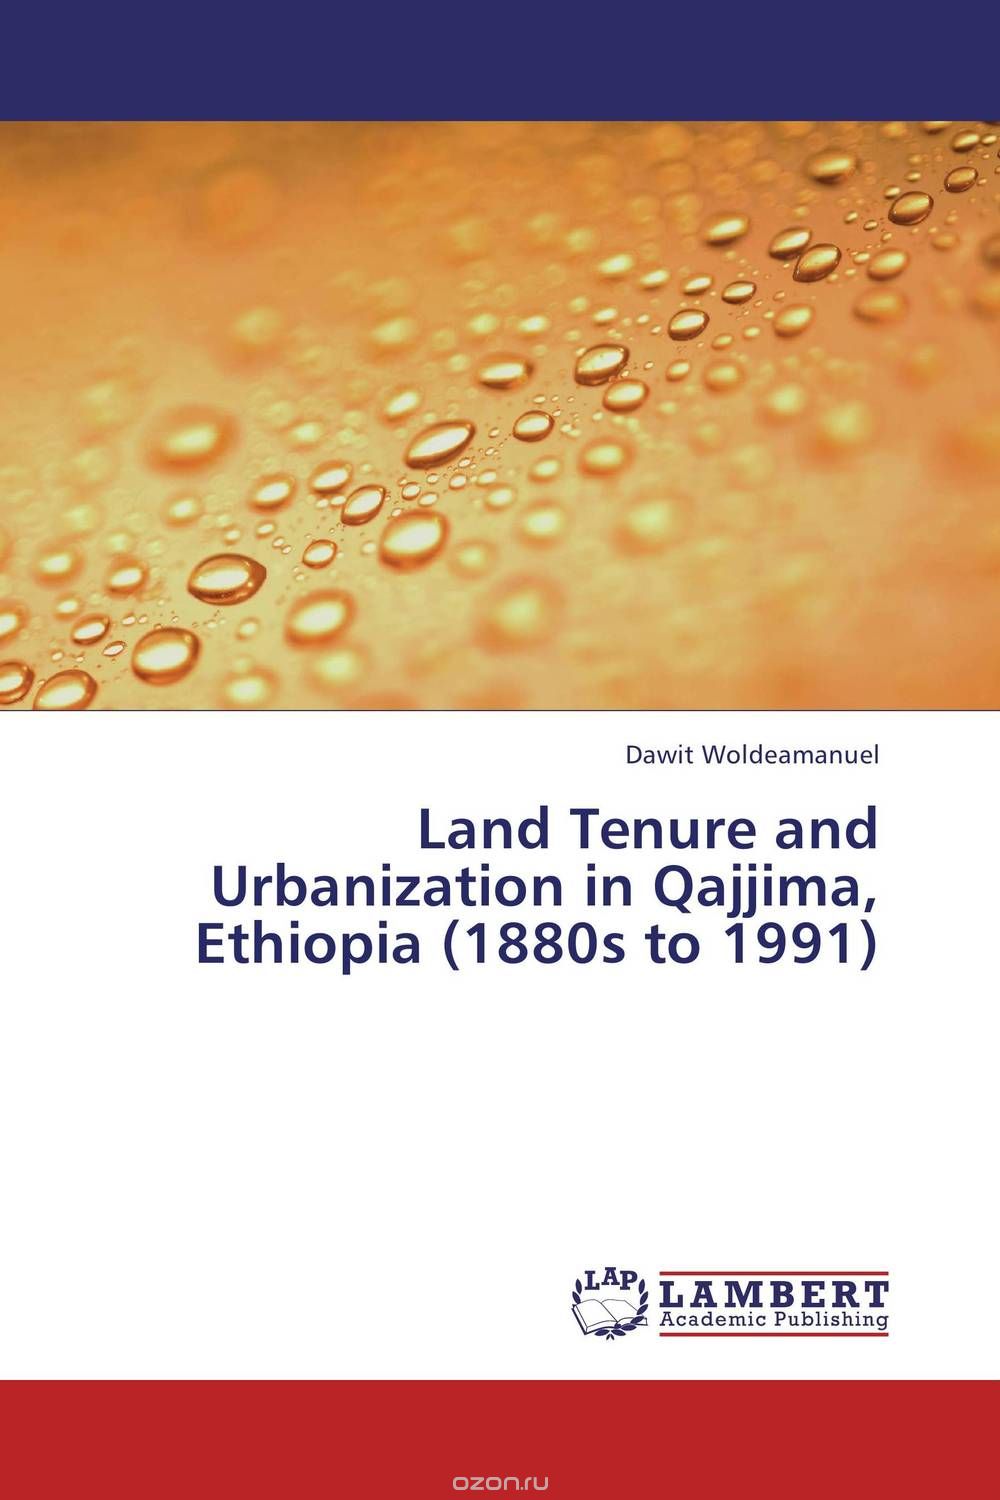 Скачать книгу "Land Tenure and Urbanization in Qajjima, Ethiopia (1880s to 1991)"